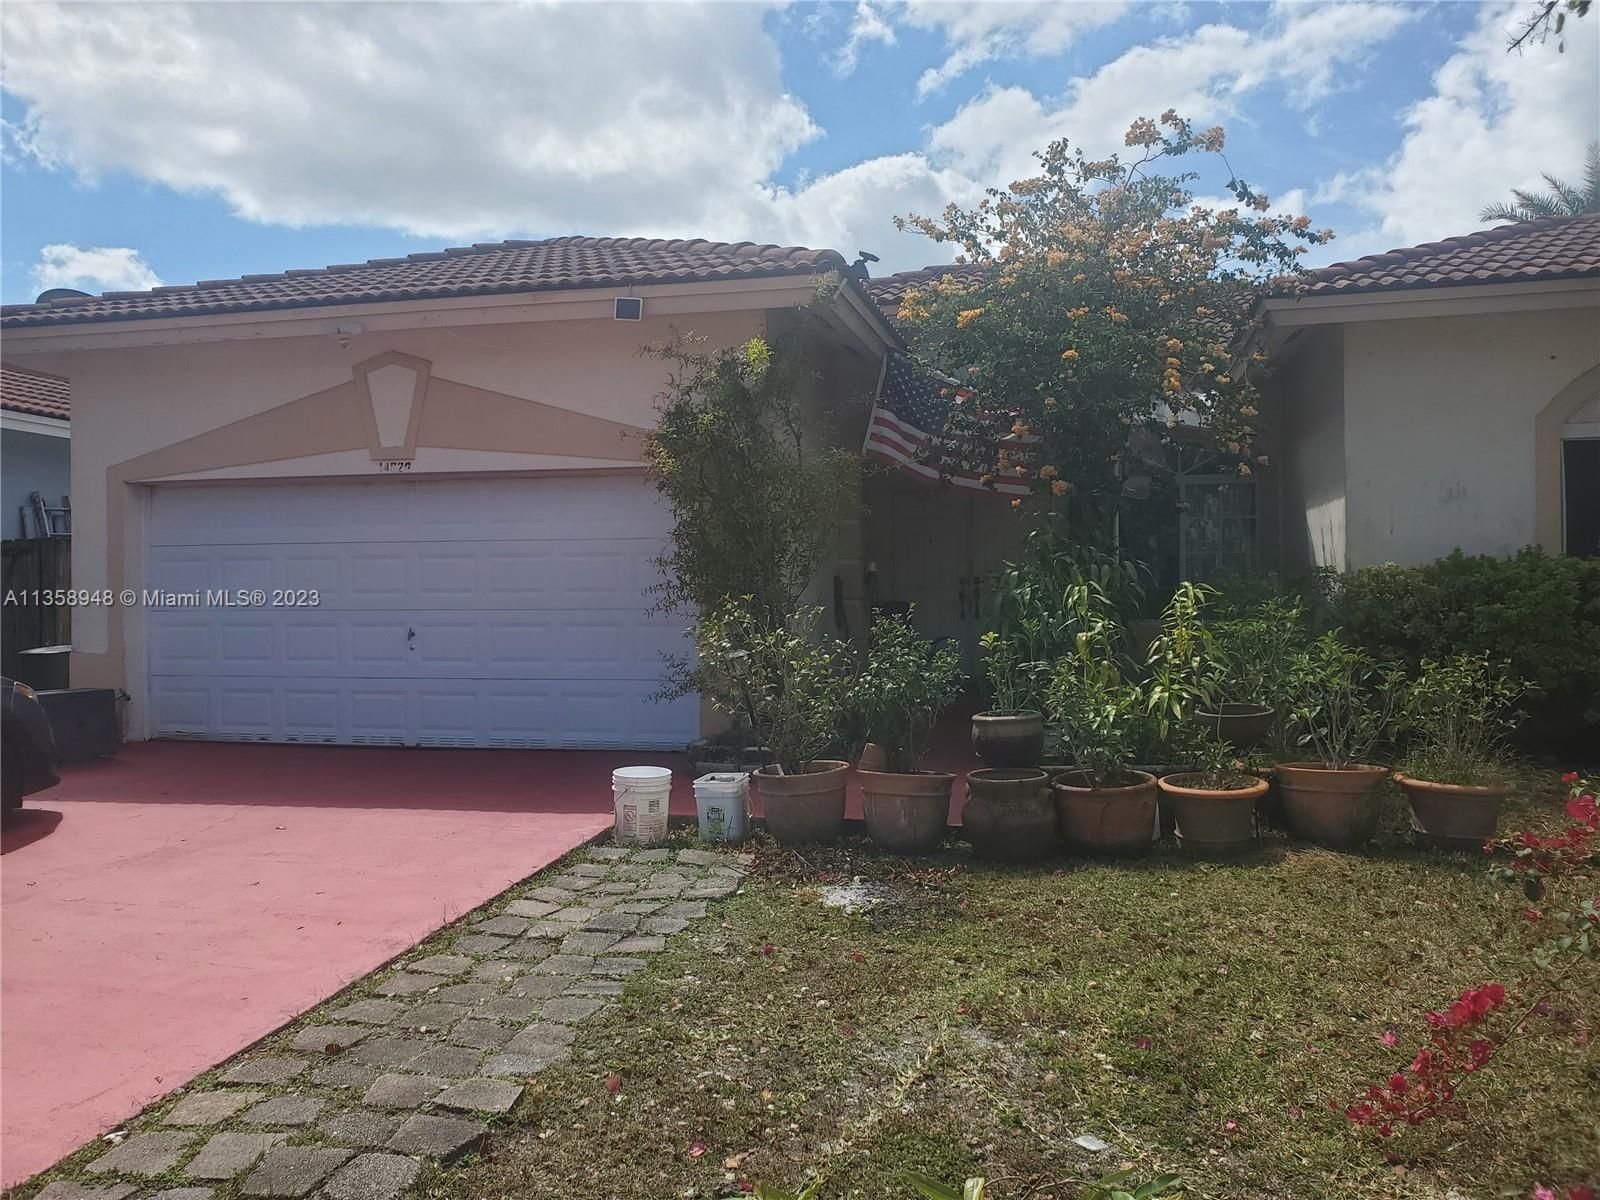 Real estate property located at 14026 161st Ct, Miami-Dade County, Miami, FL